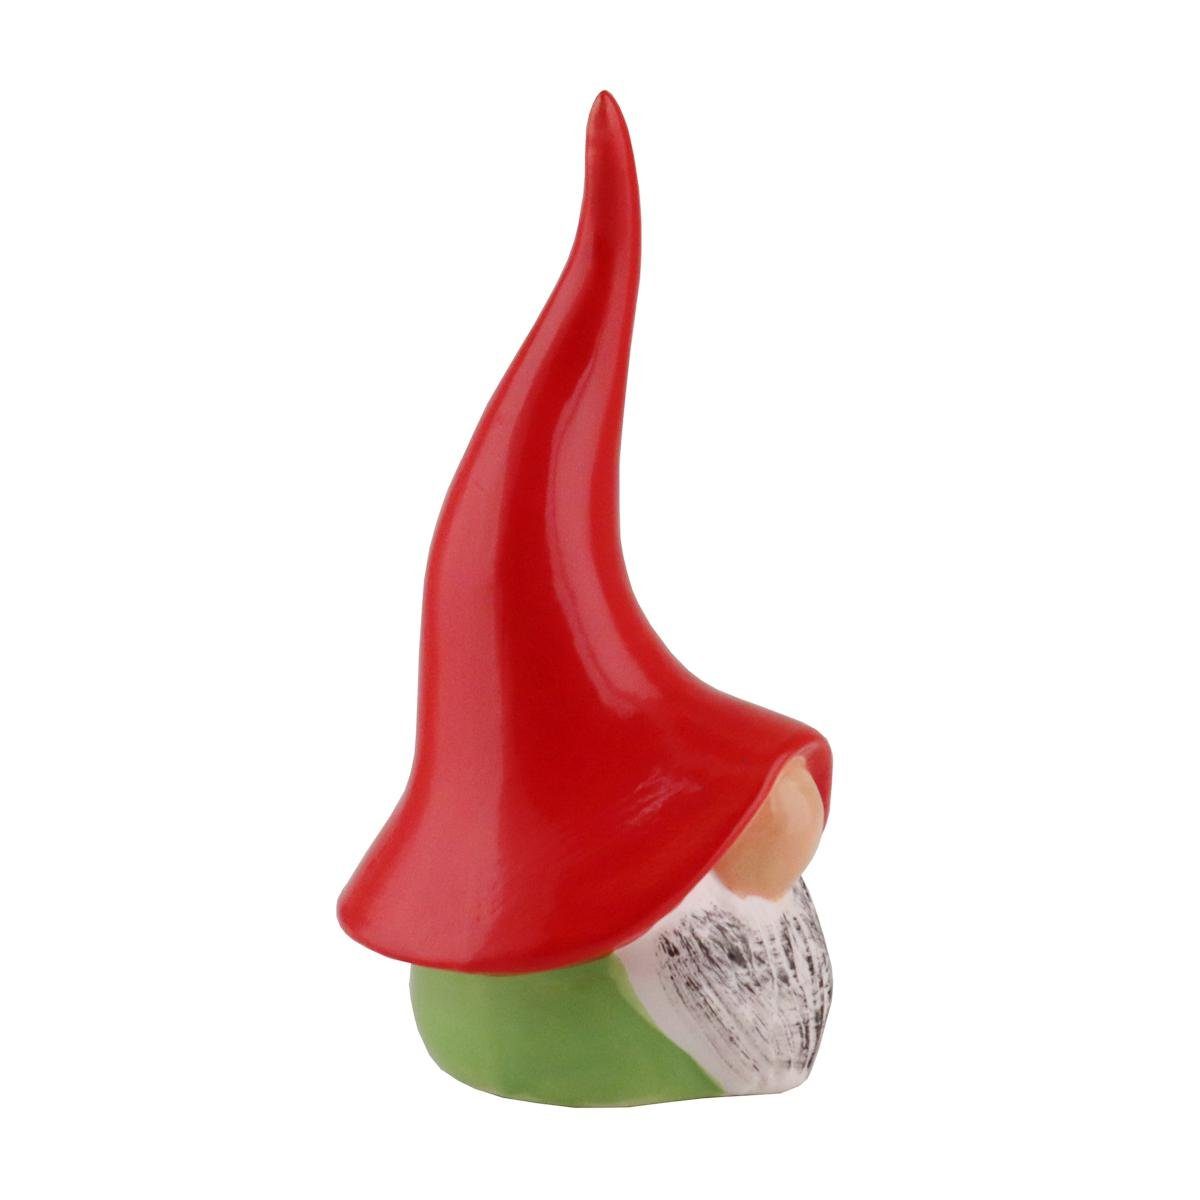 Tangoo Gartenfigur Tangoo Keramik-Wichtel hellgrün mit roter Mütze H ca 18 cm, (Stück)